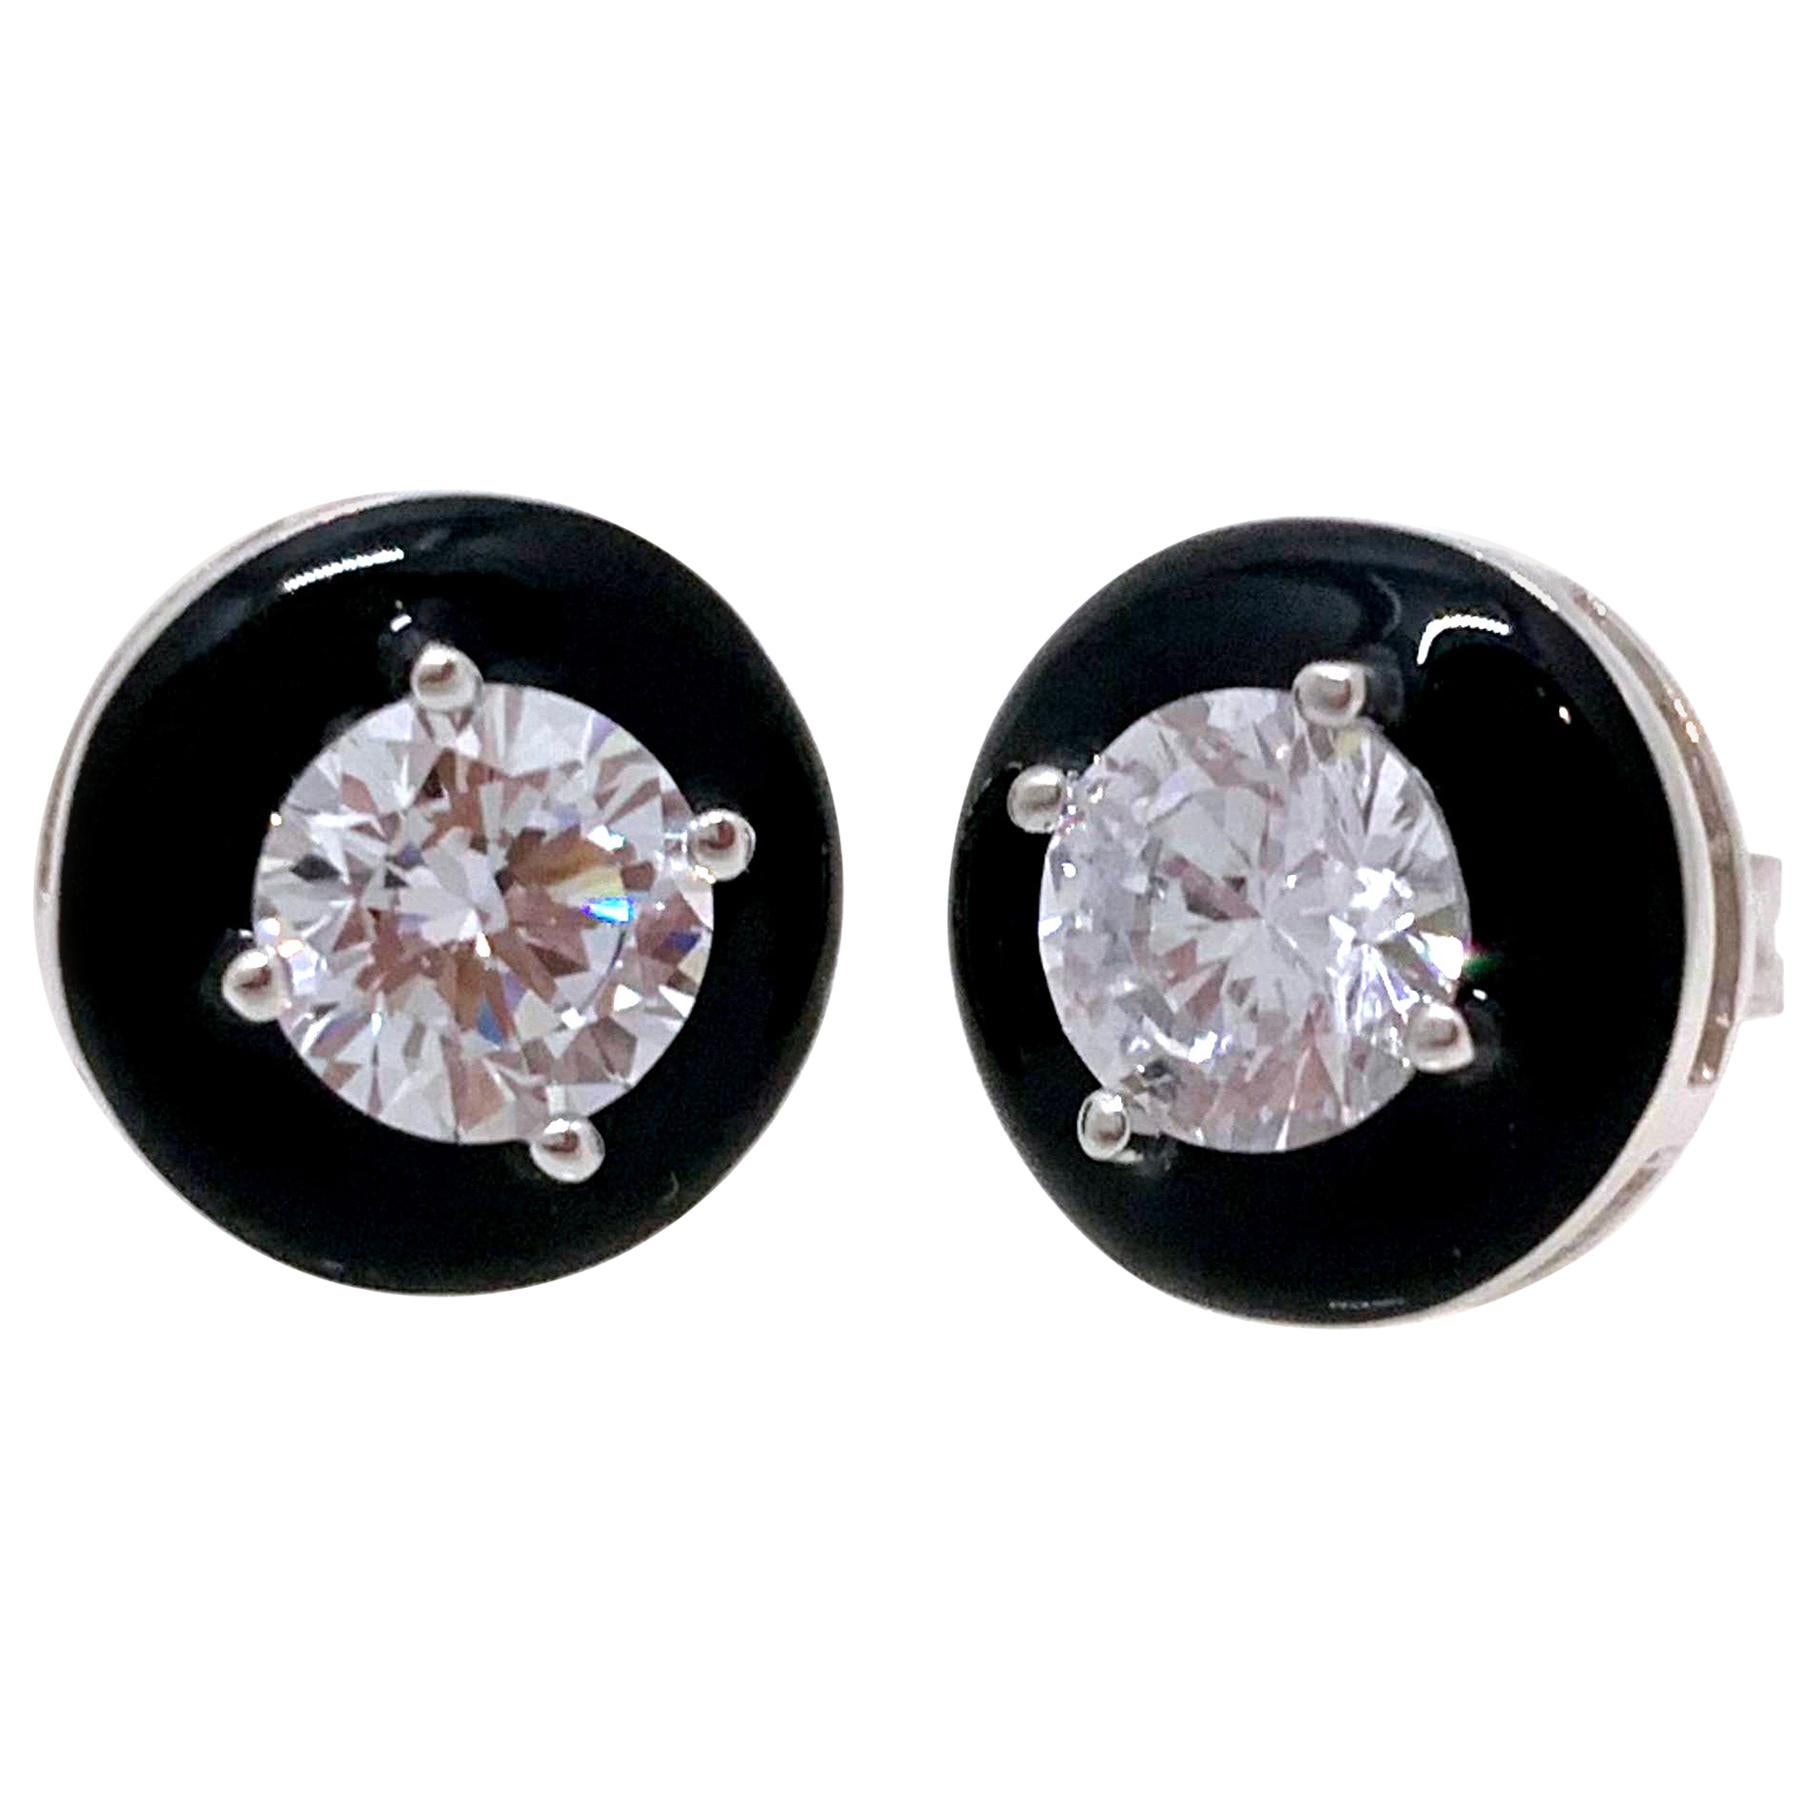 Modern Black Enamel 1ct Round Simulated Diamond Stud Sterling Silver Earrings